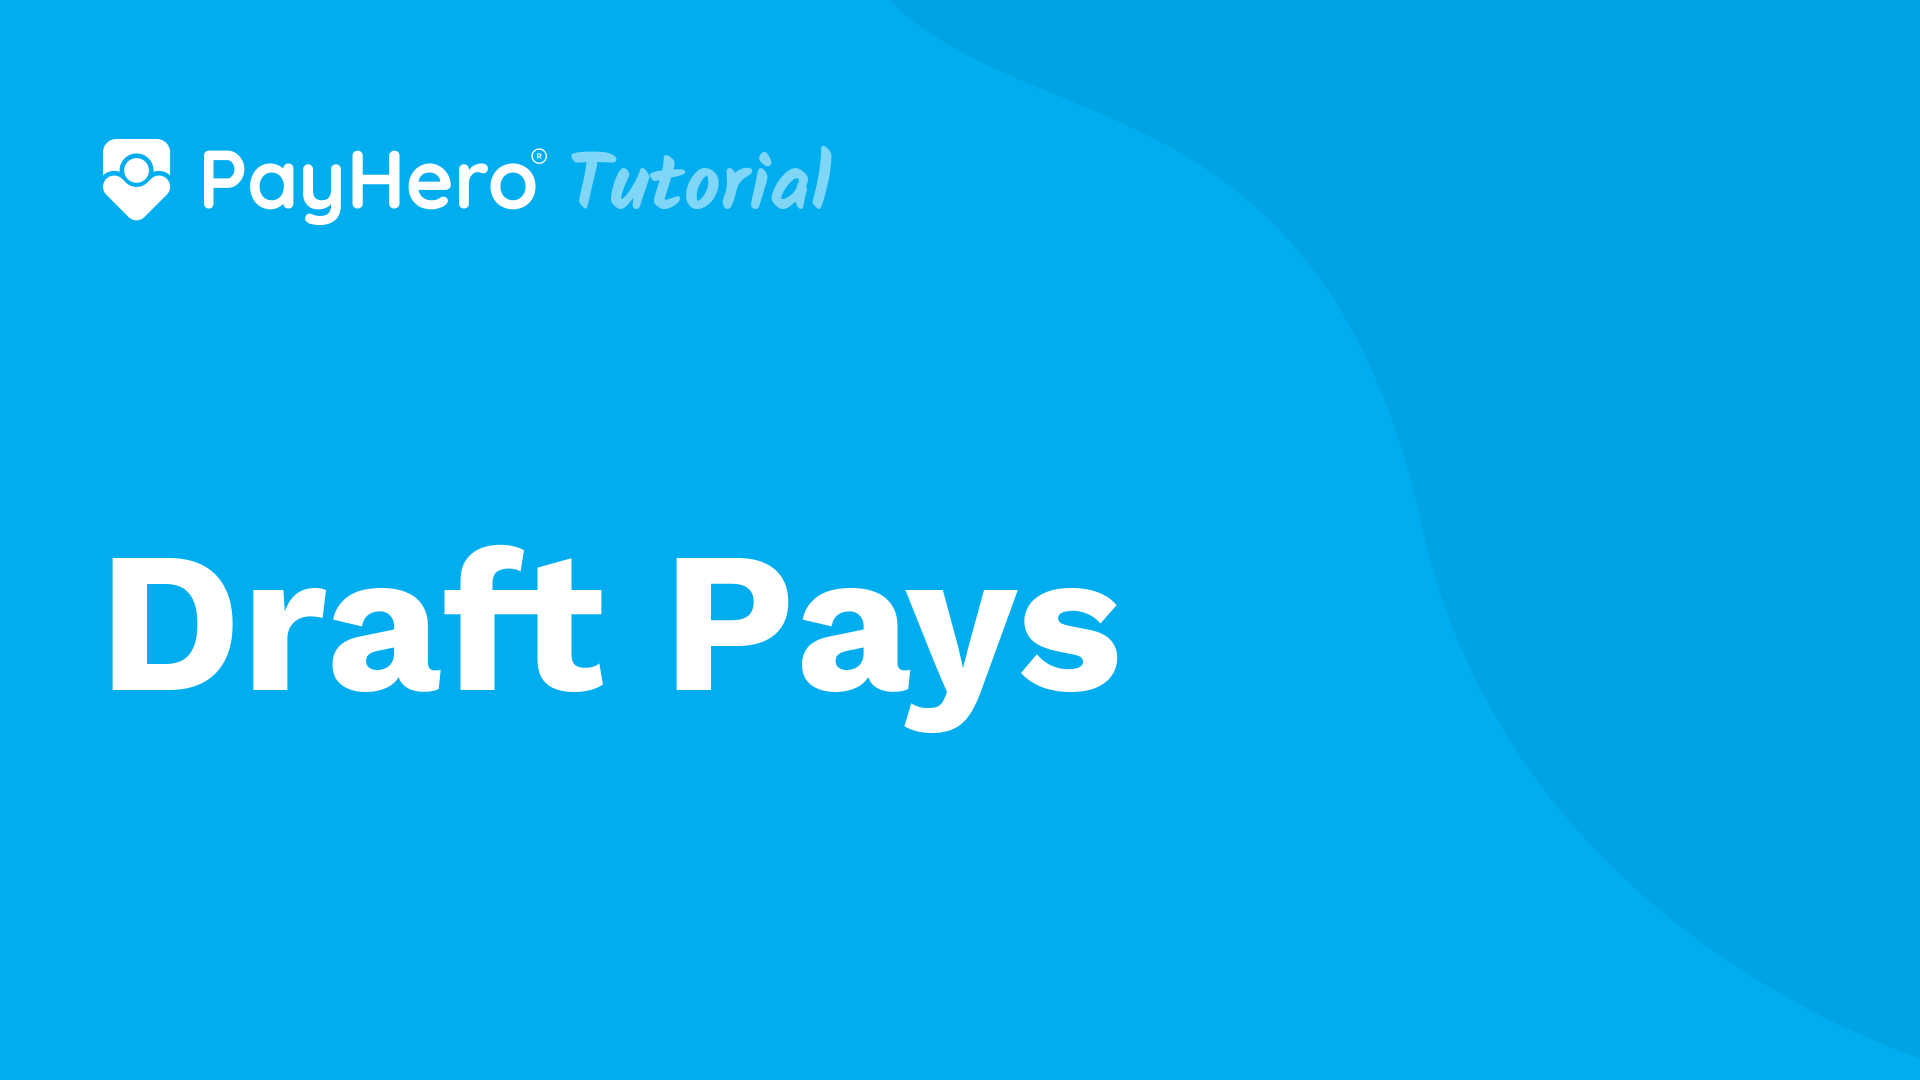 Draft pays | PayHero Video Guide